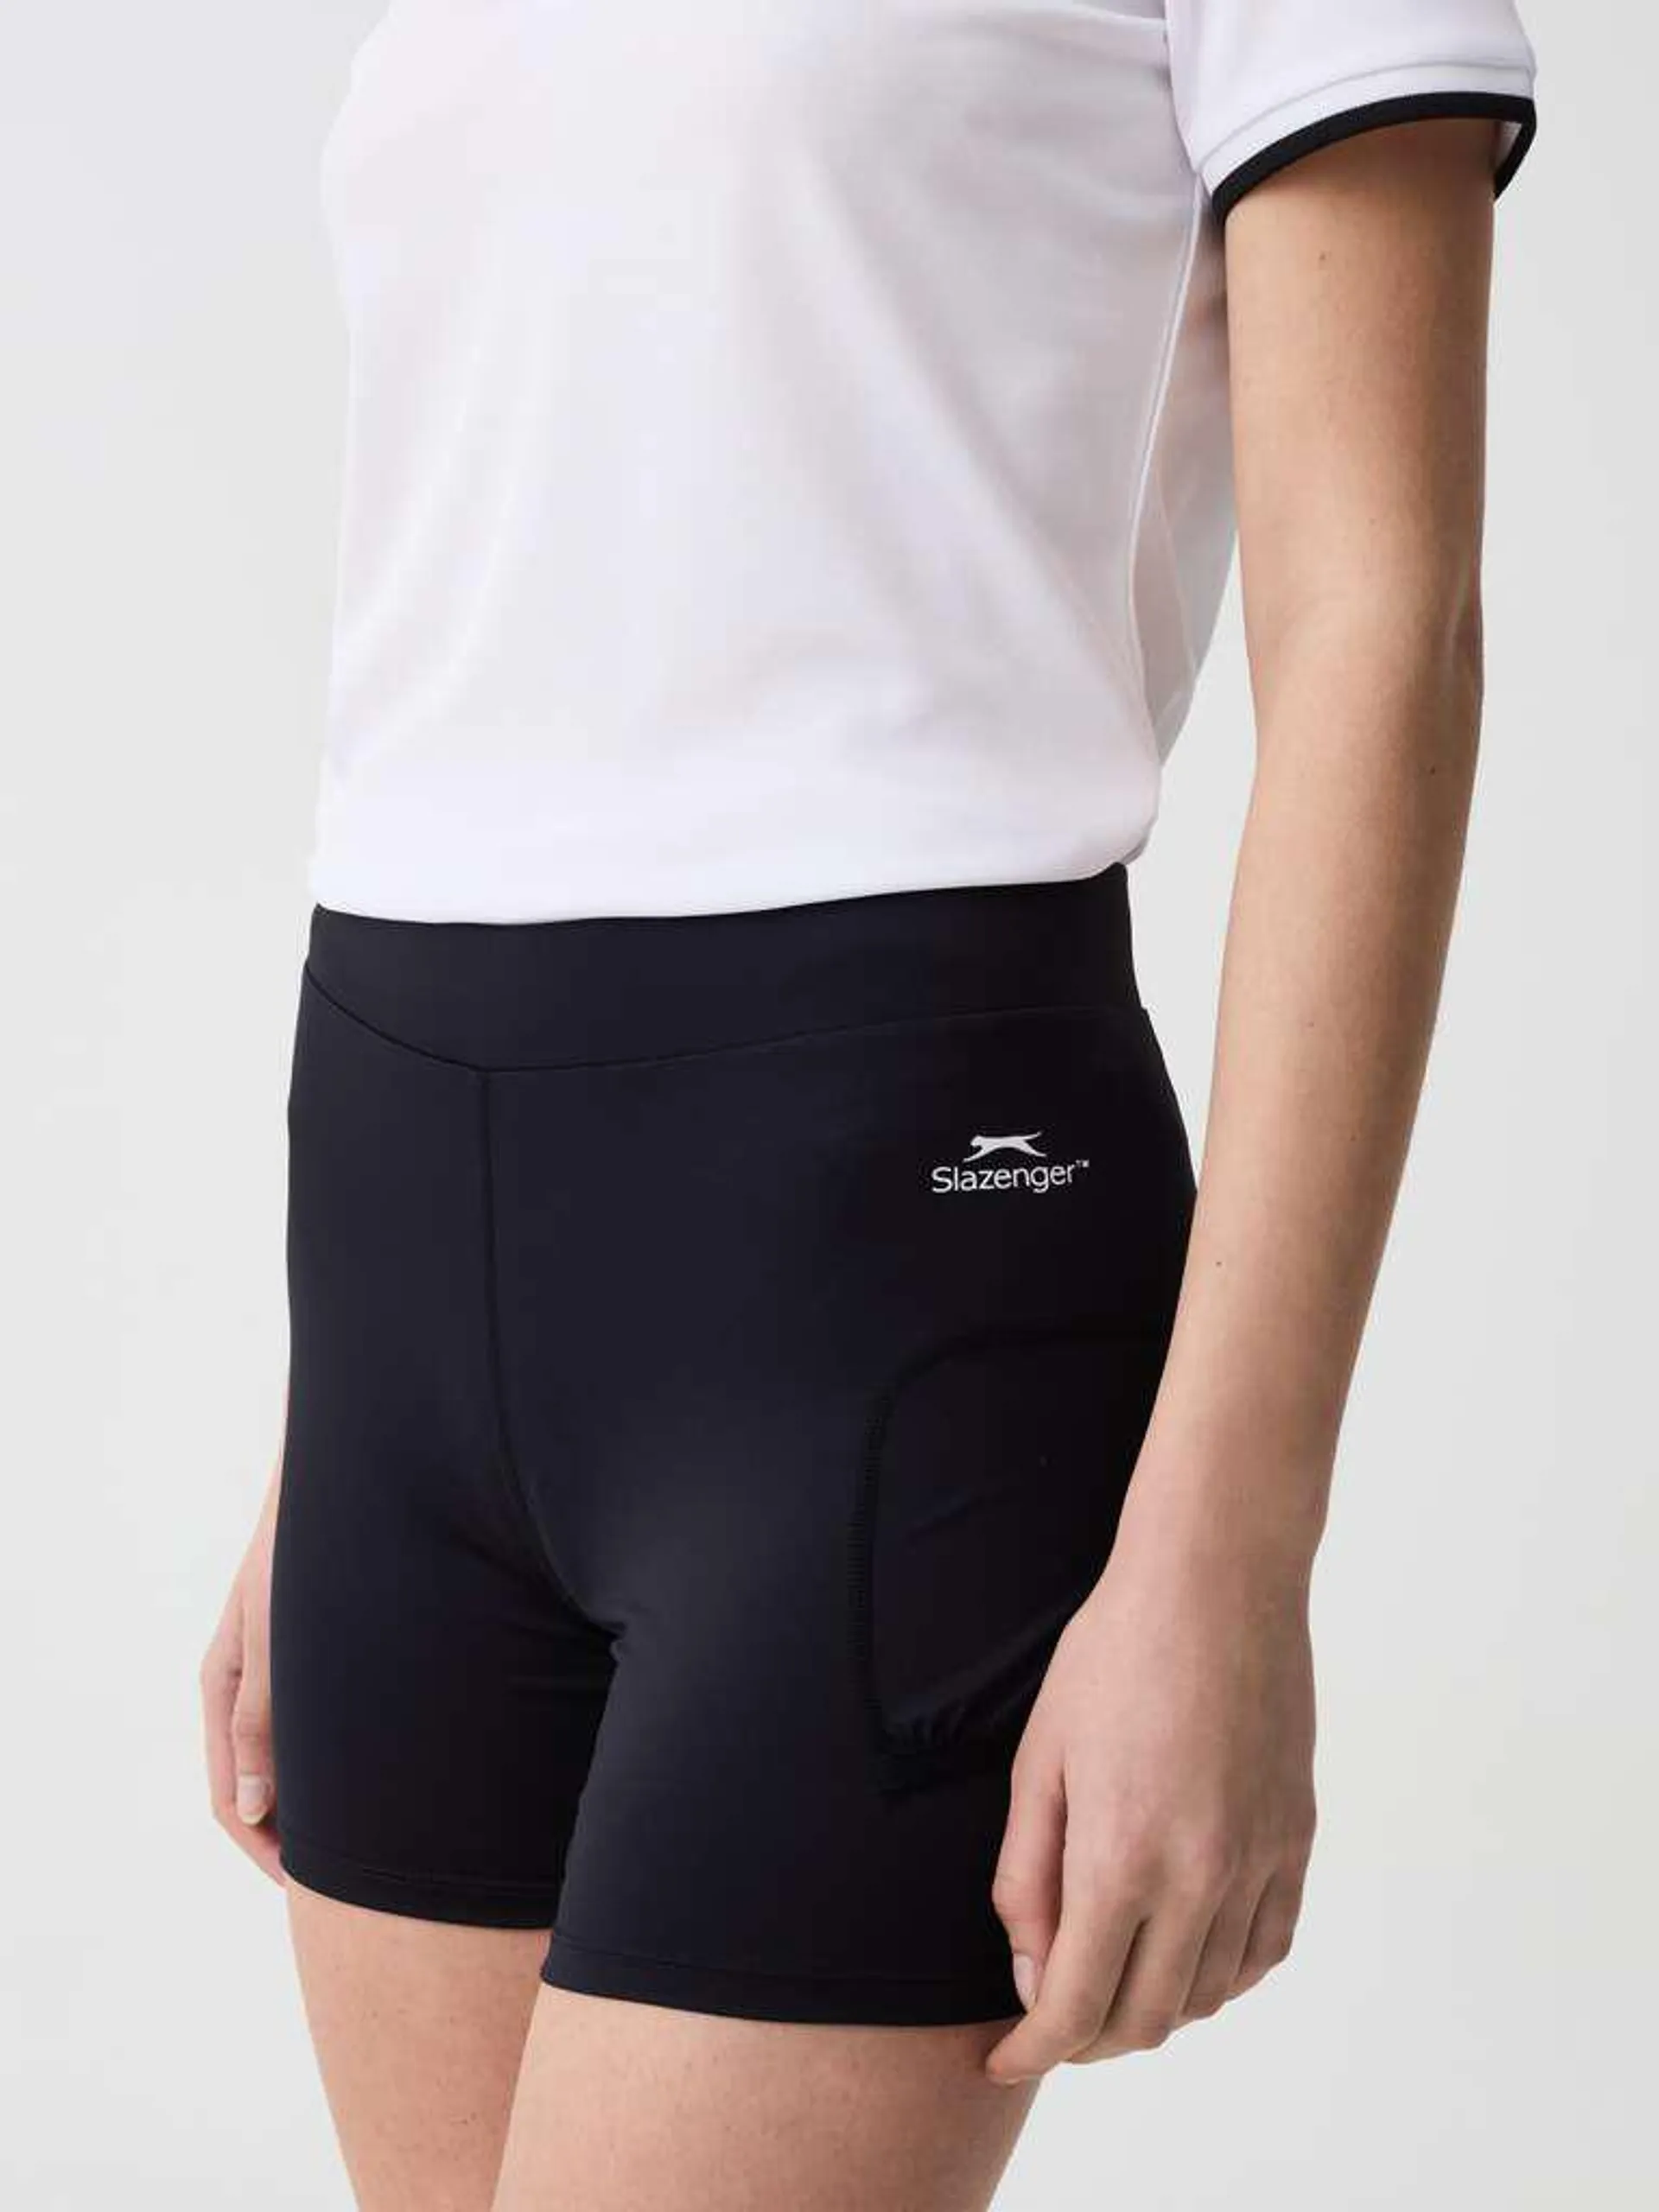 Black Slazenger quick-dry tennis shorts